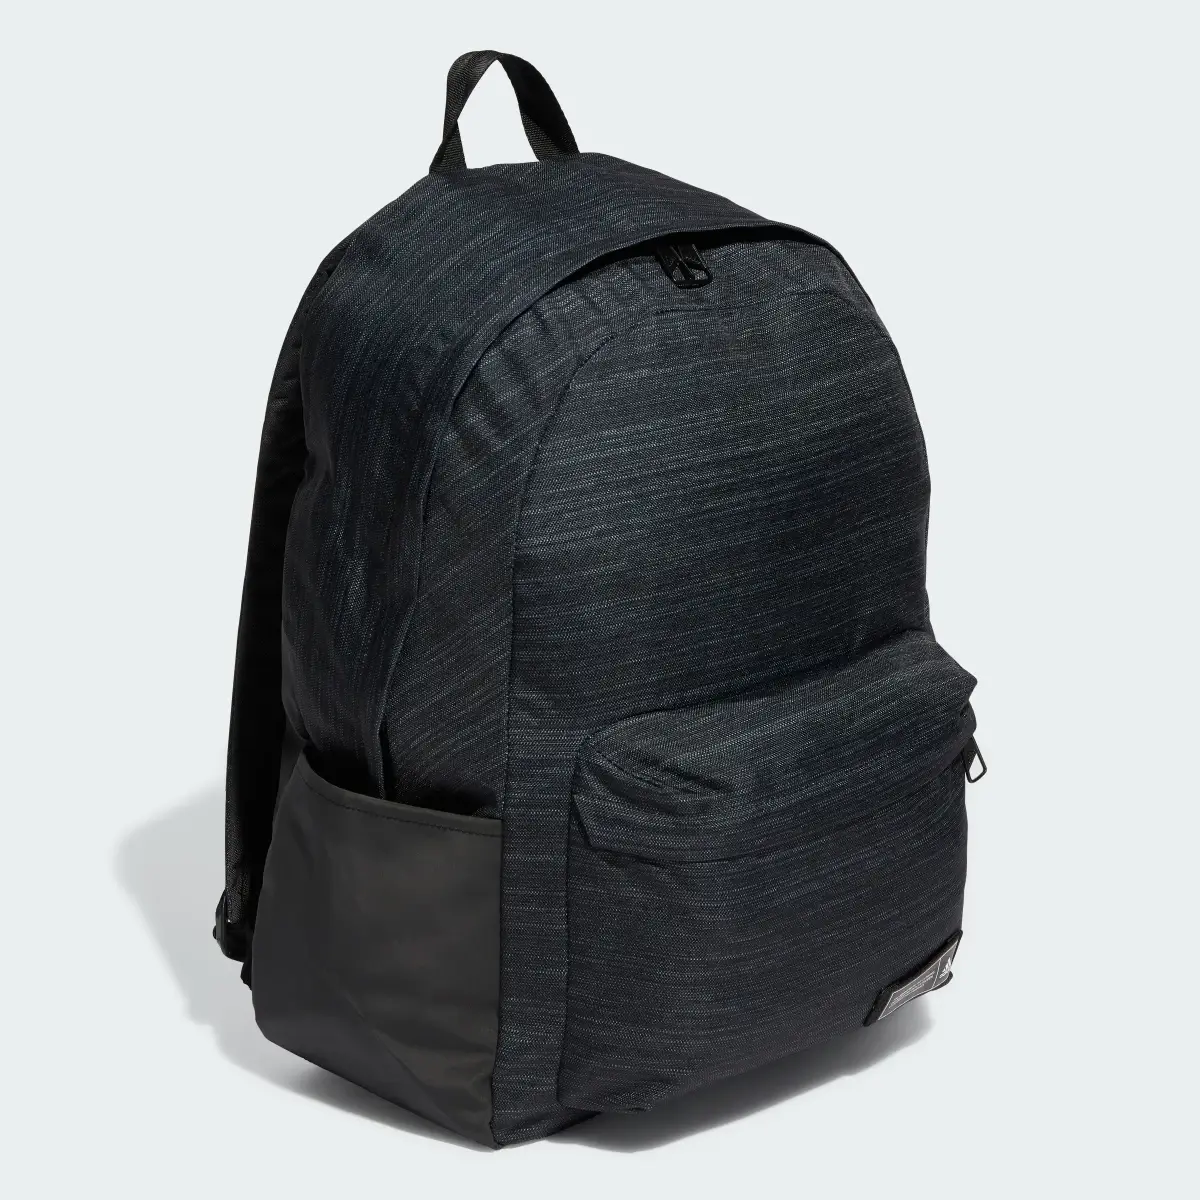 Adidas Attitude Classic Backpack. 2